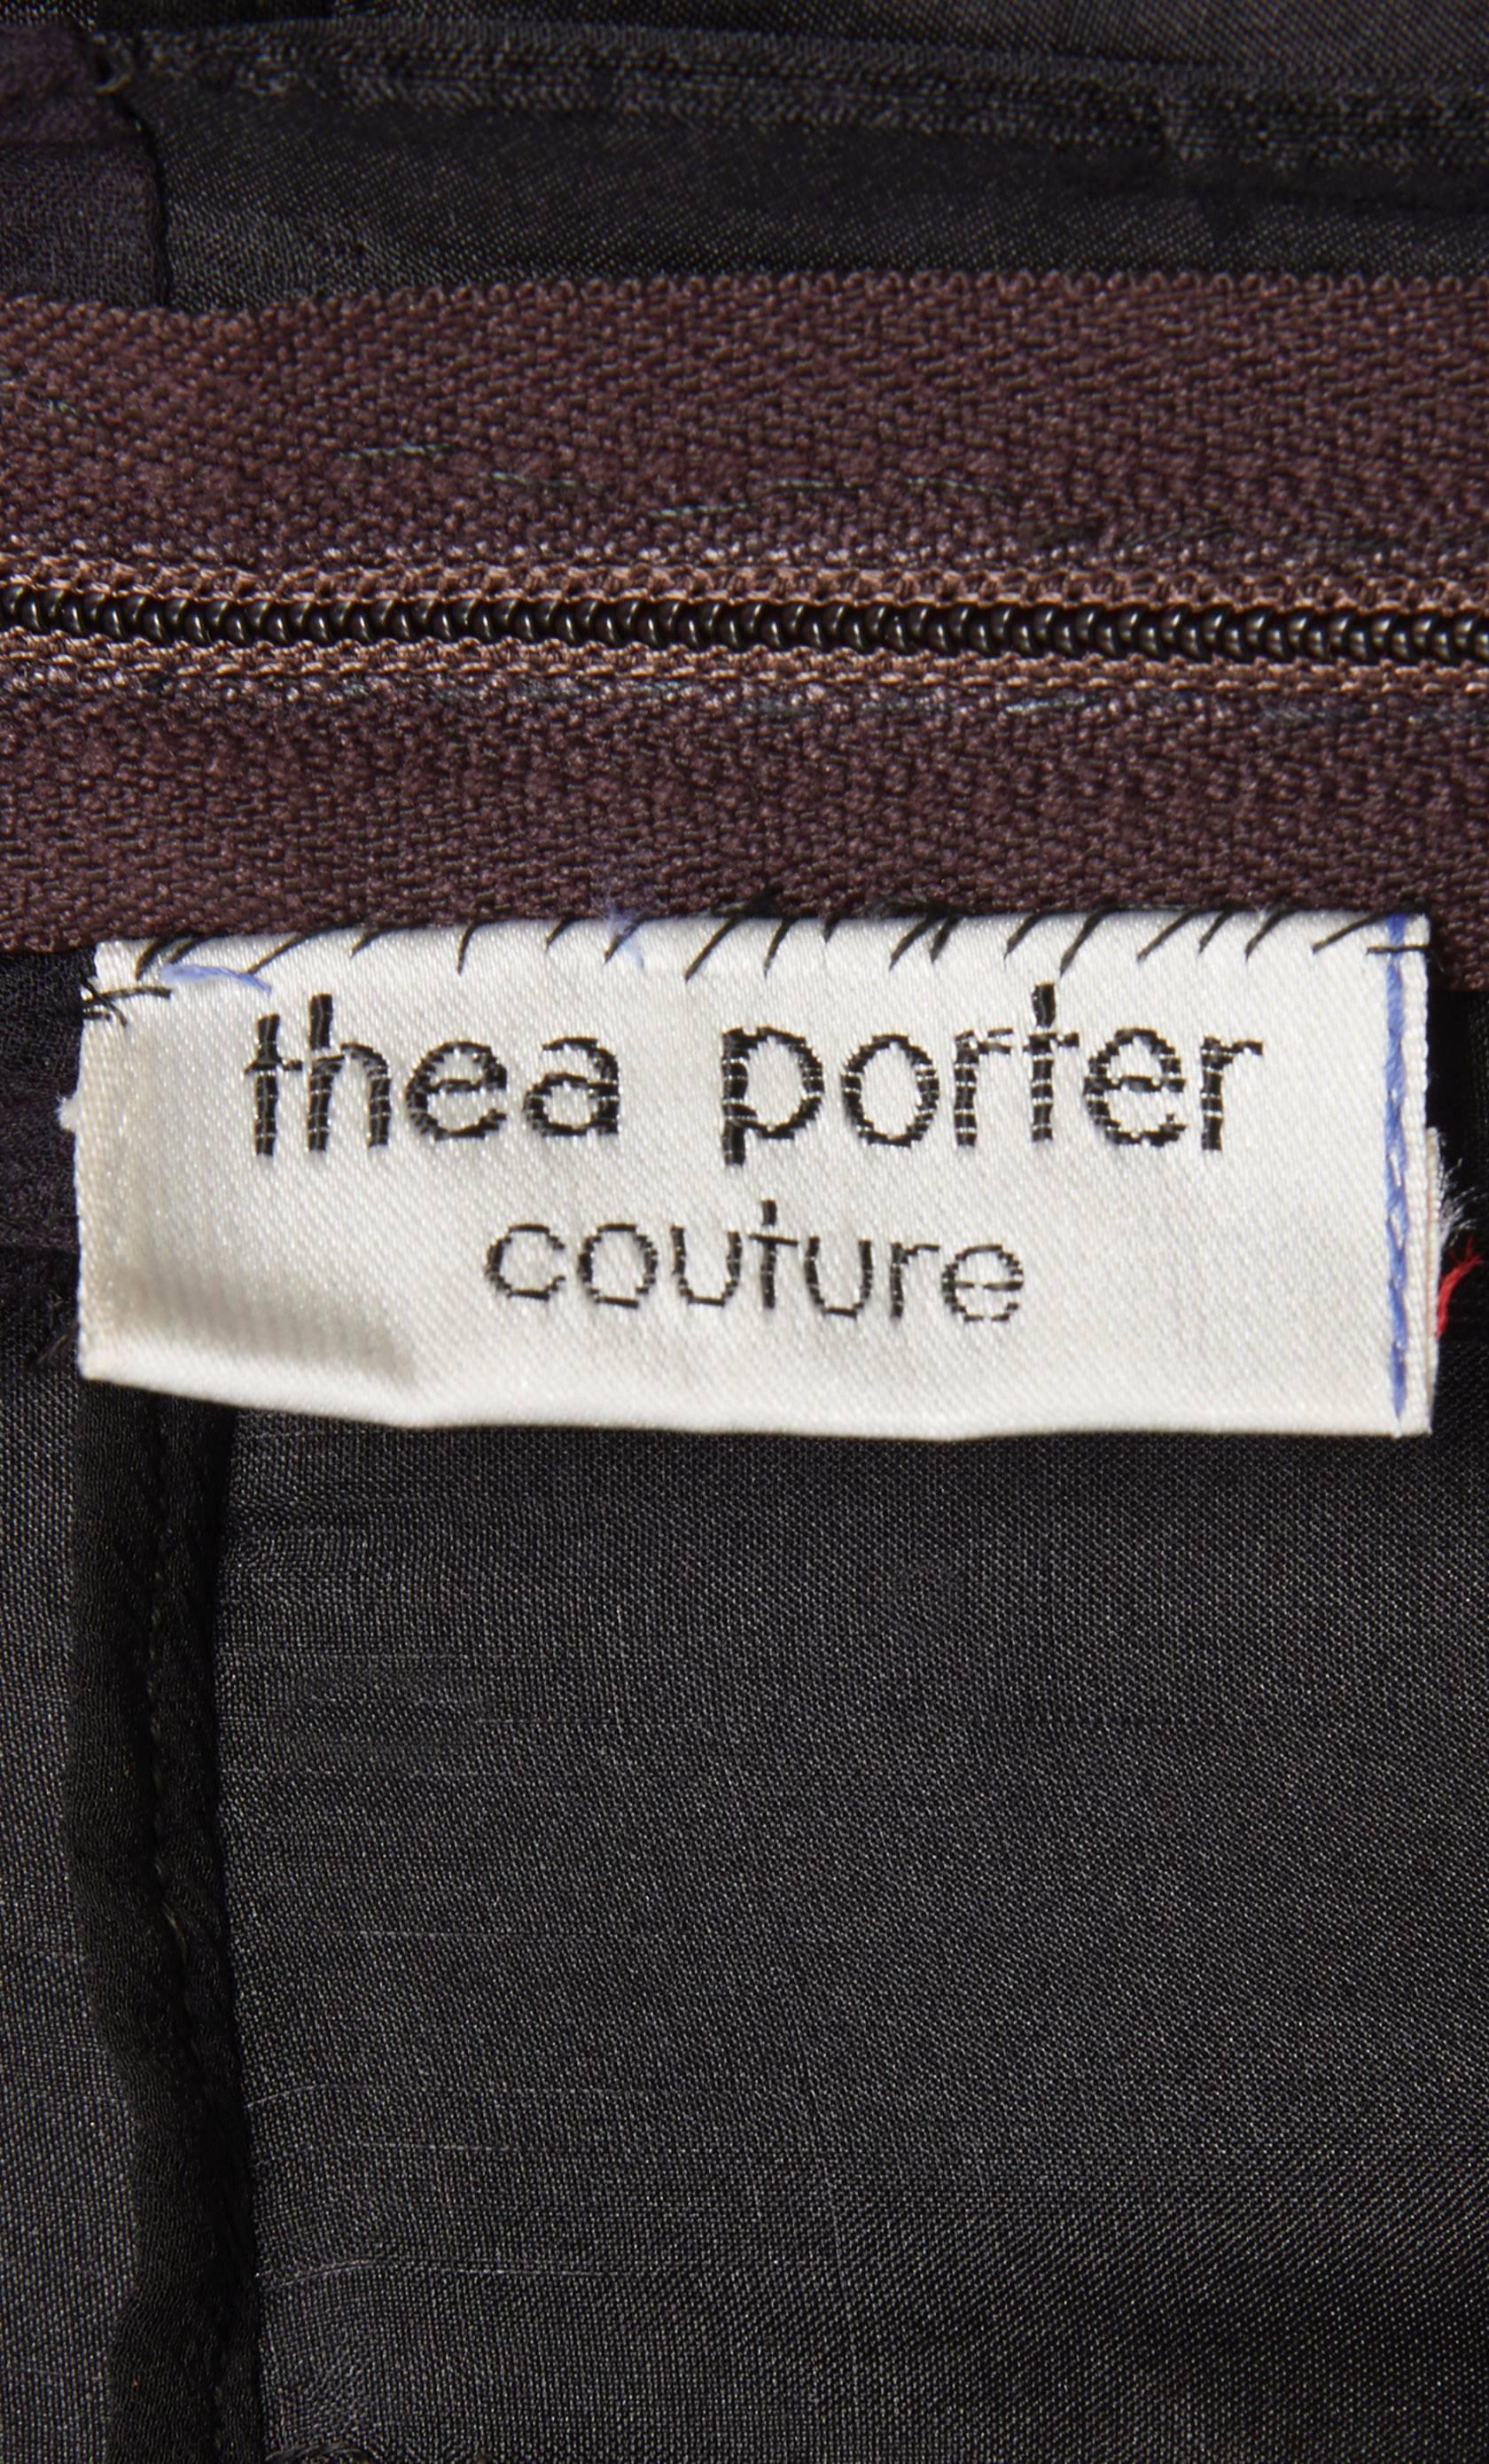 Women's Thea Porter couture navy heart print dress, circa 1975 For Sale